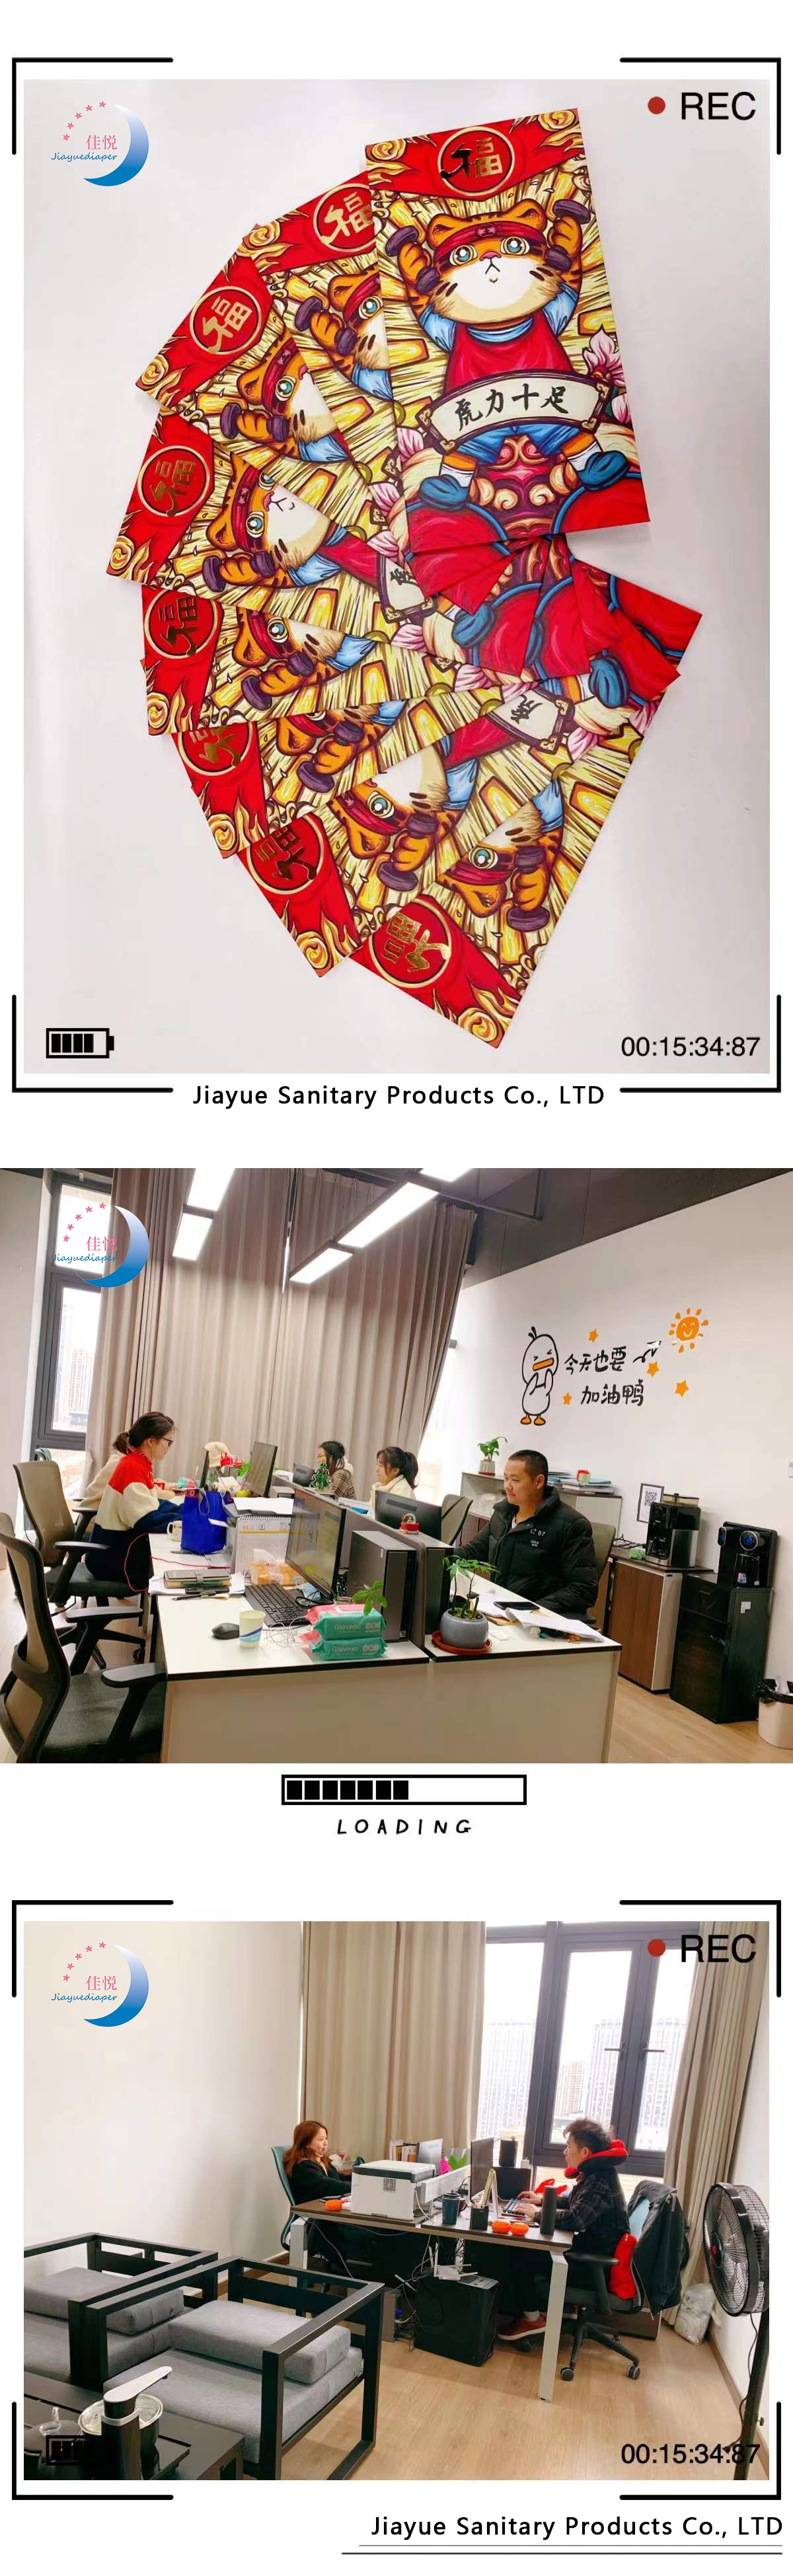 Jiayue Sanitary Products Co.